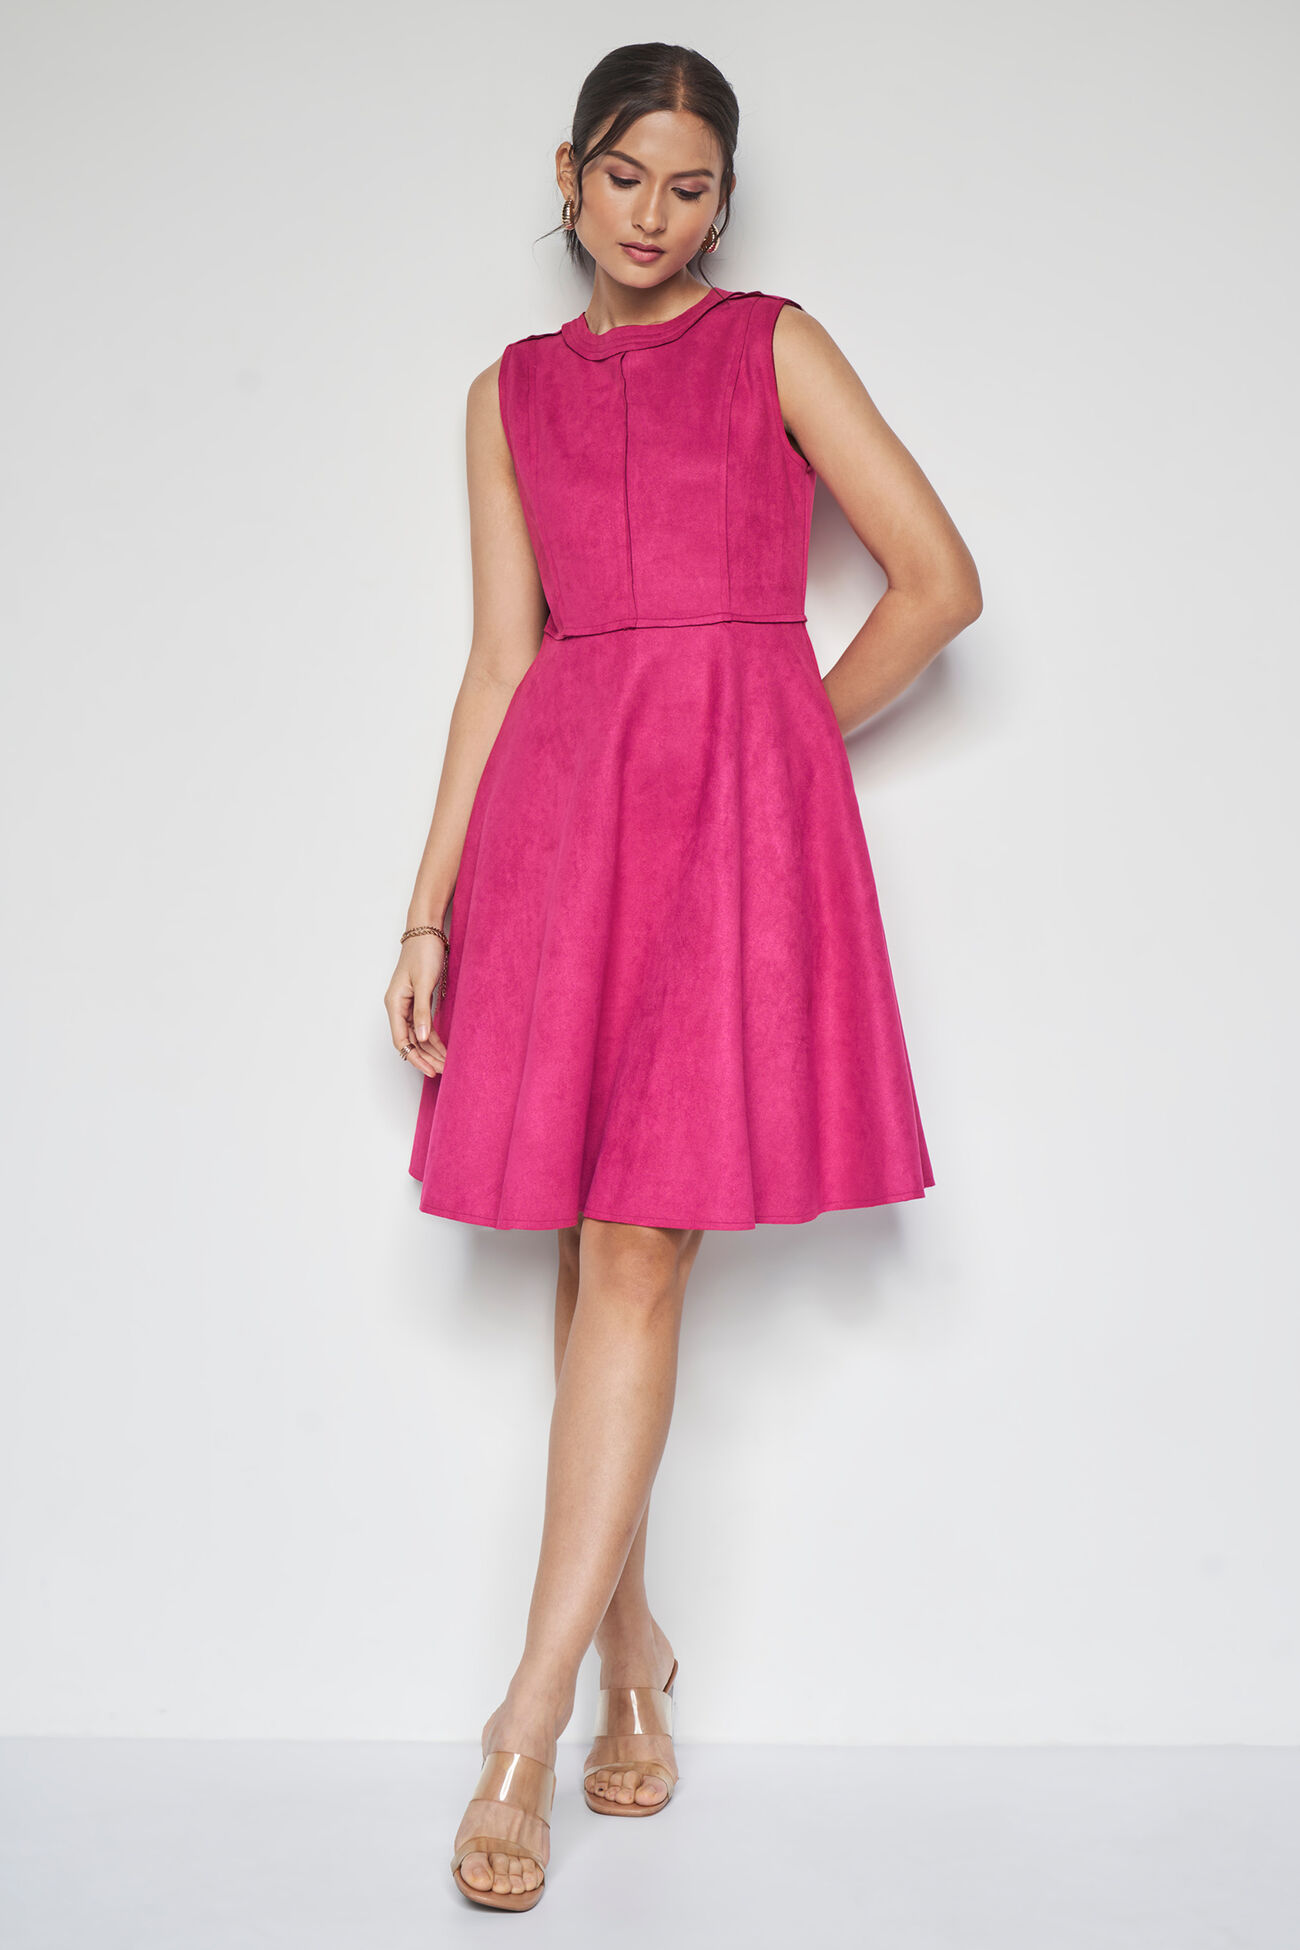 Alexis Dress, Dark Pink, image 3